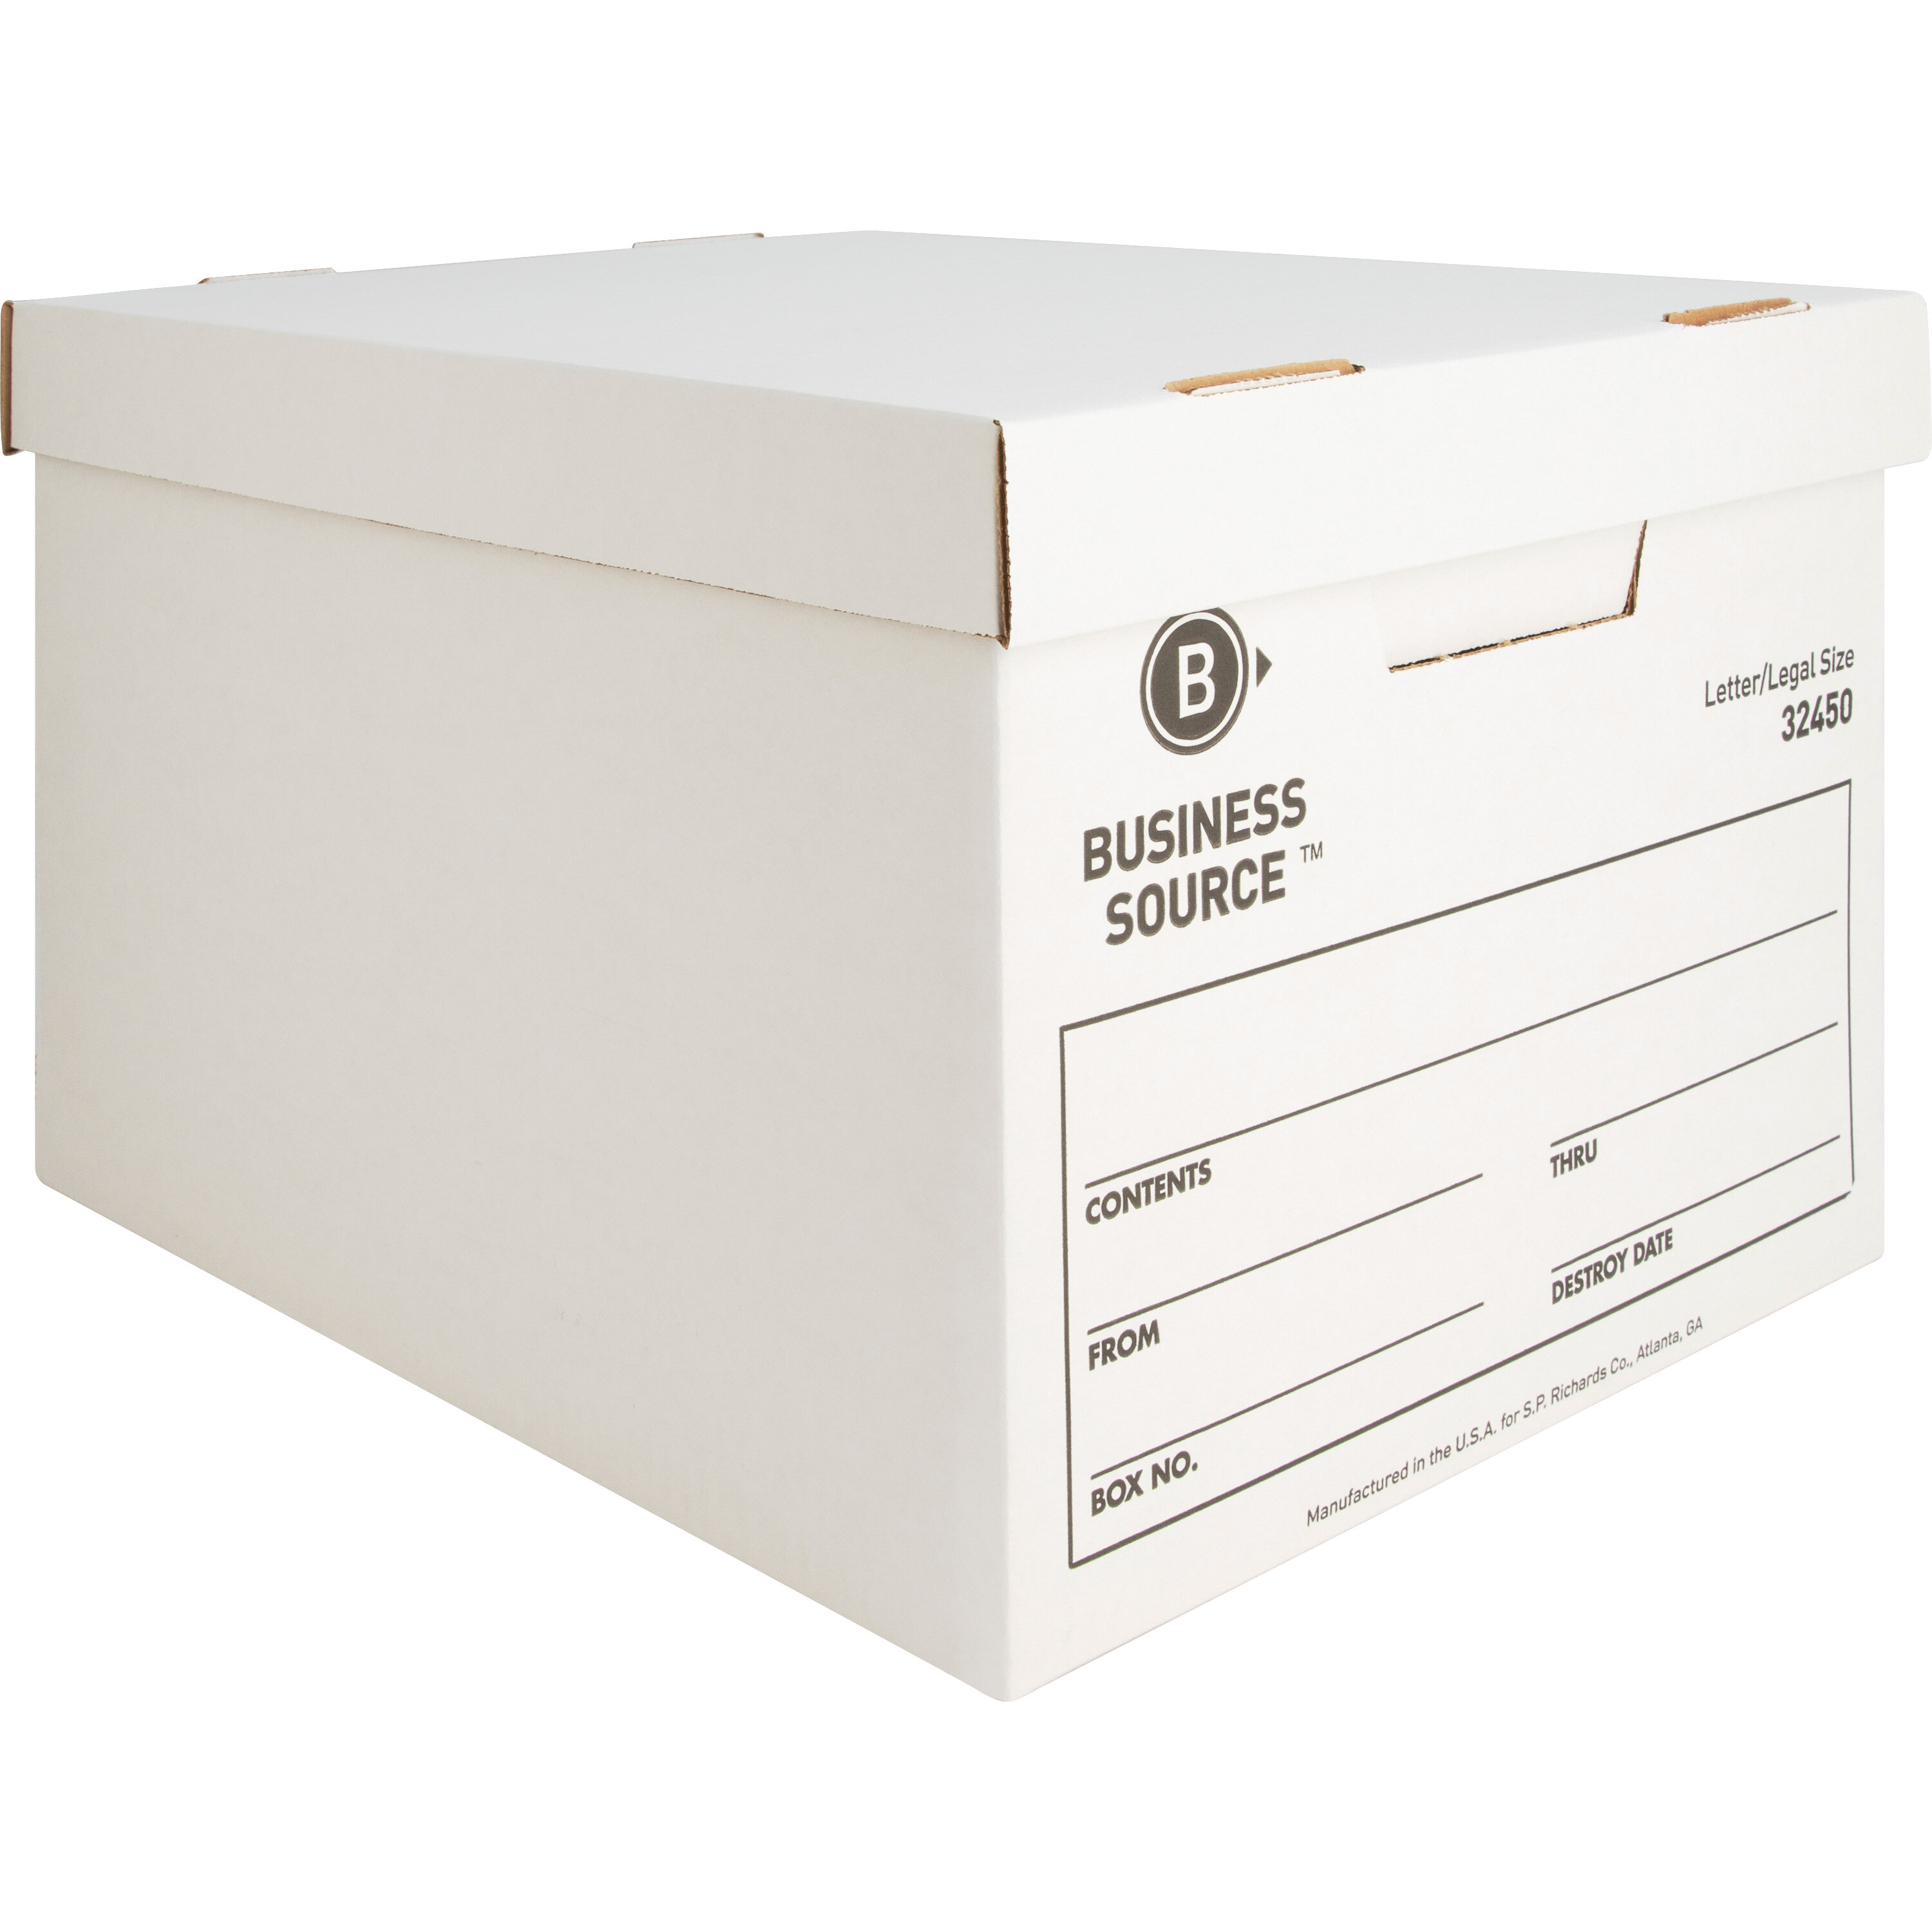 IRIS USA 4 Pack Letter/Legal Size File Box, 1 unit - Foods Co.